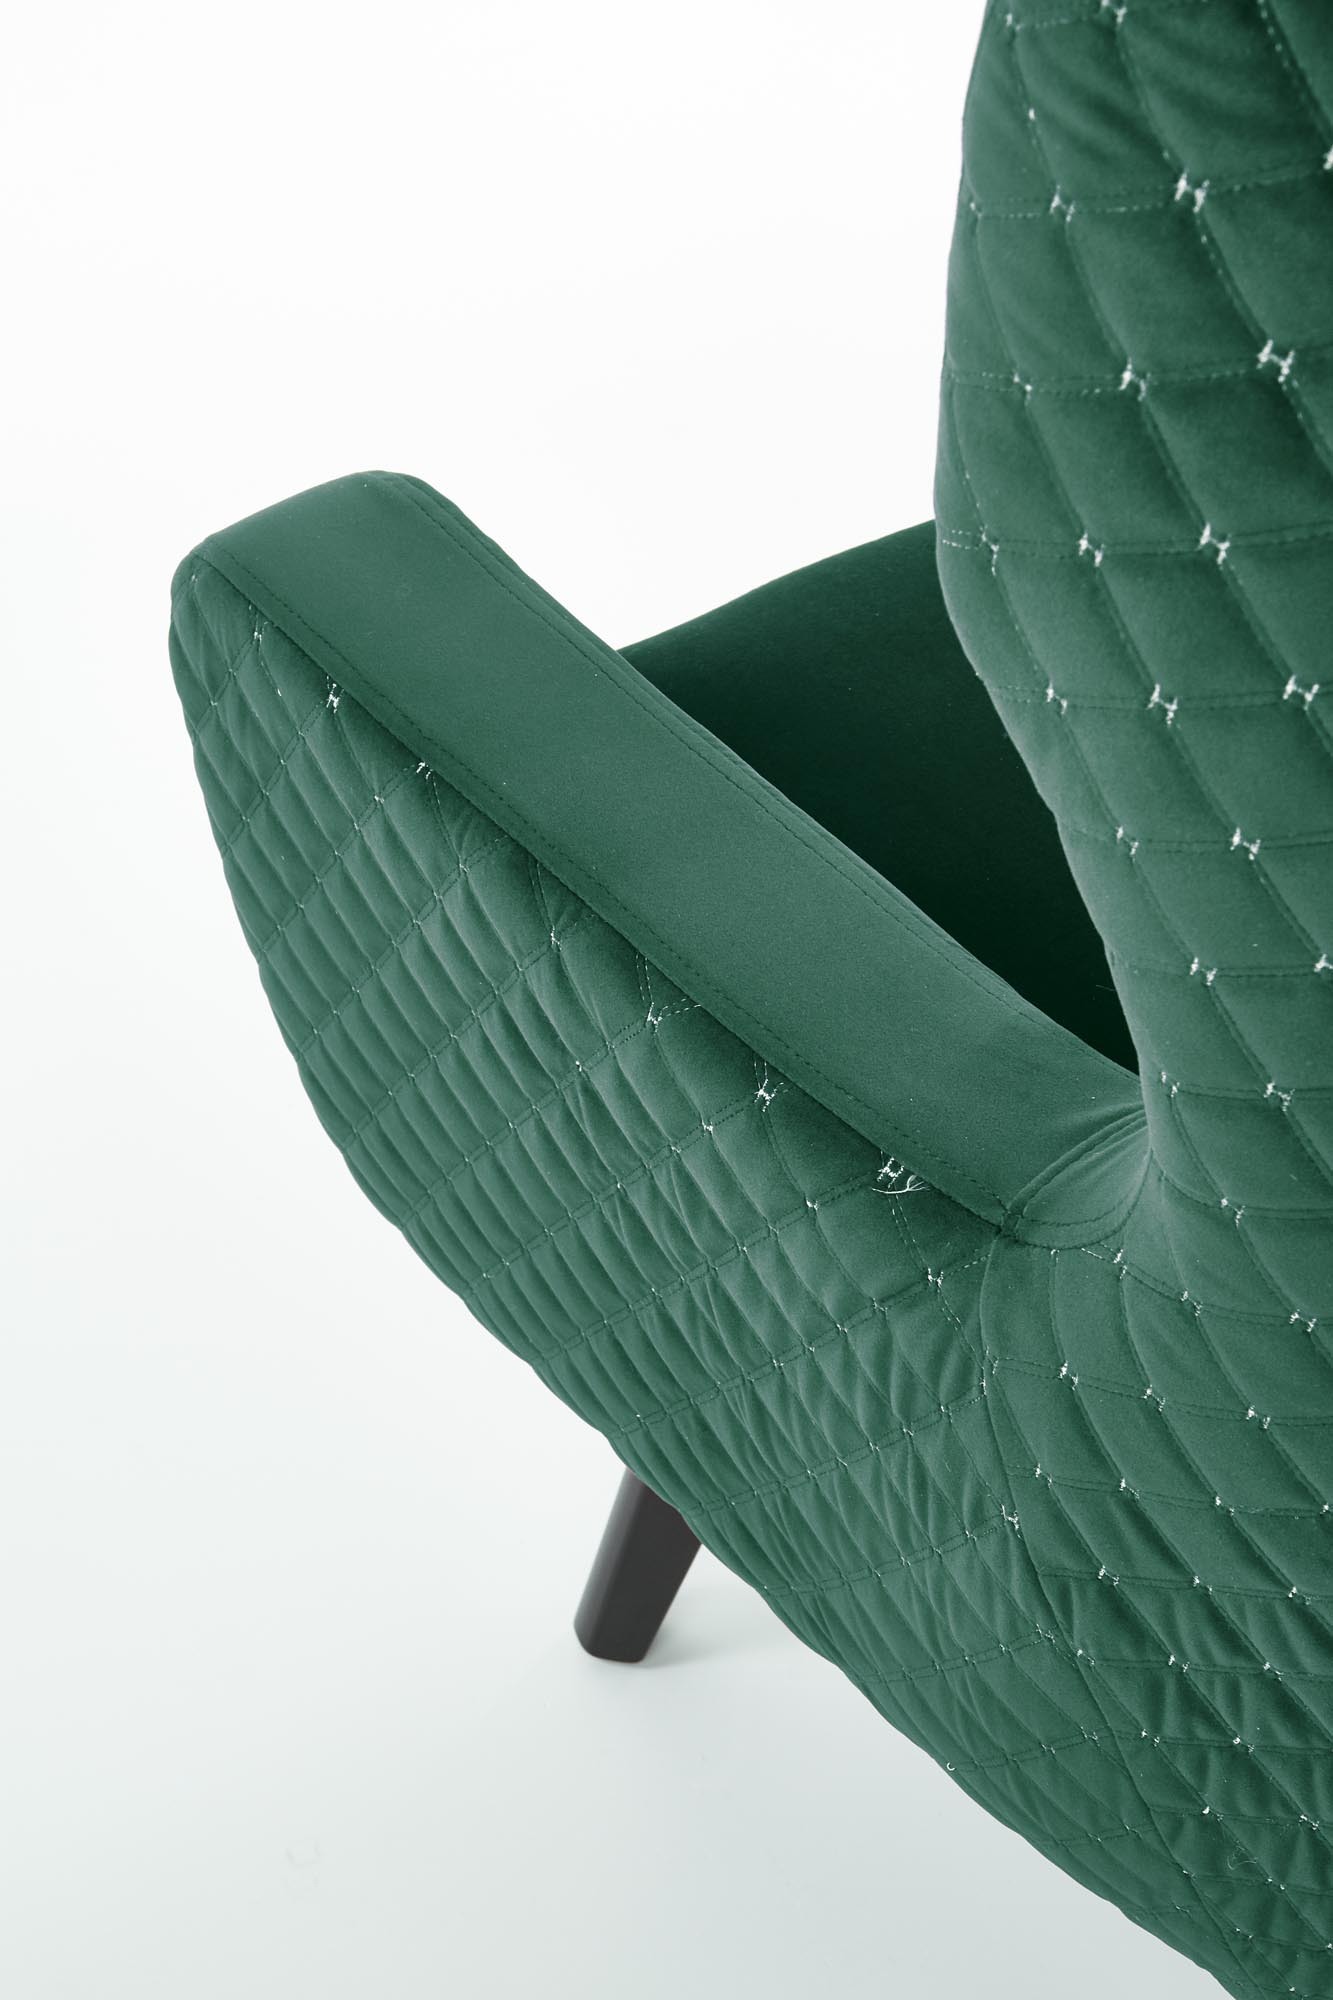 Fotel uszak Renoder zielony